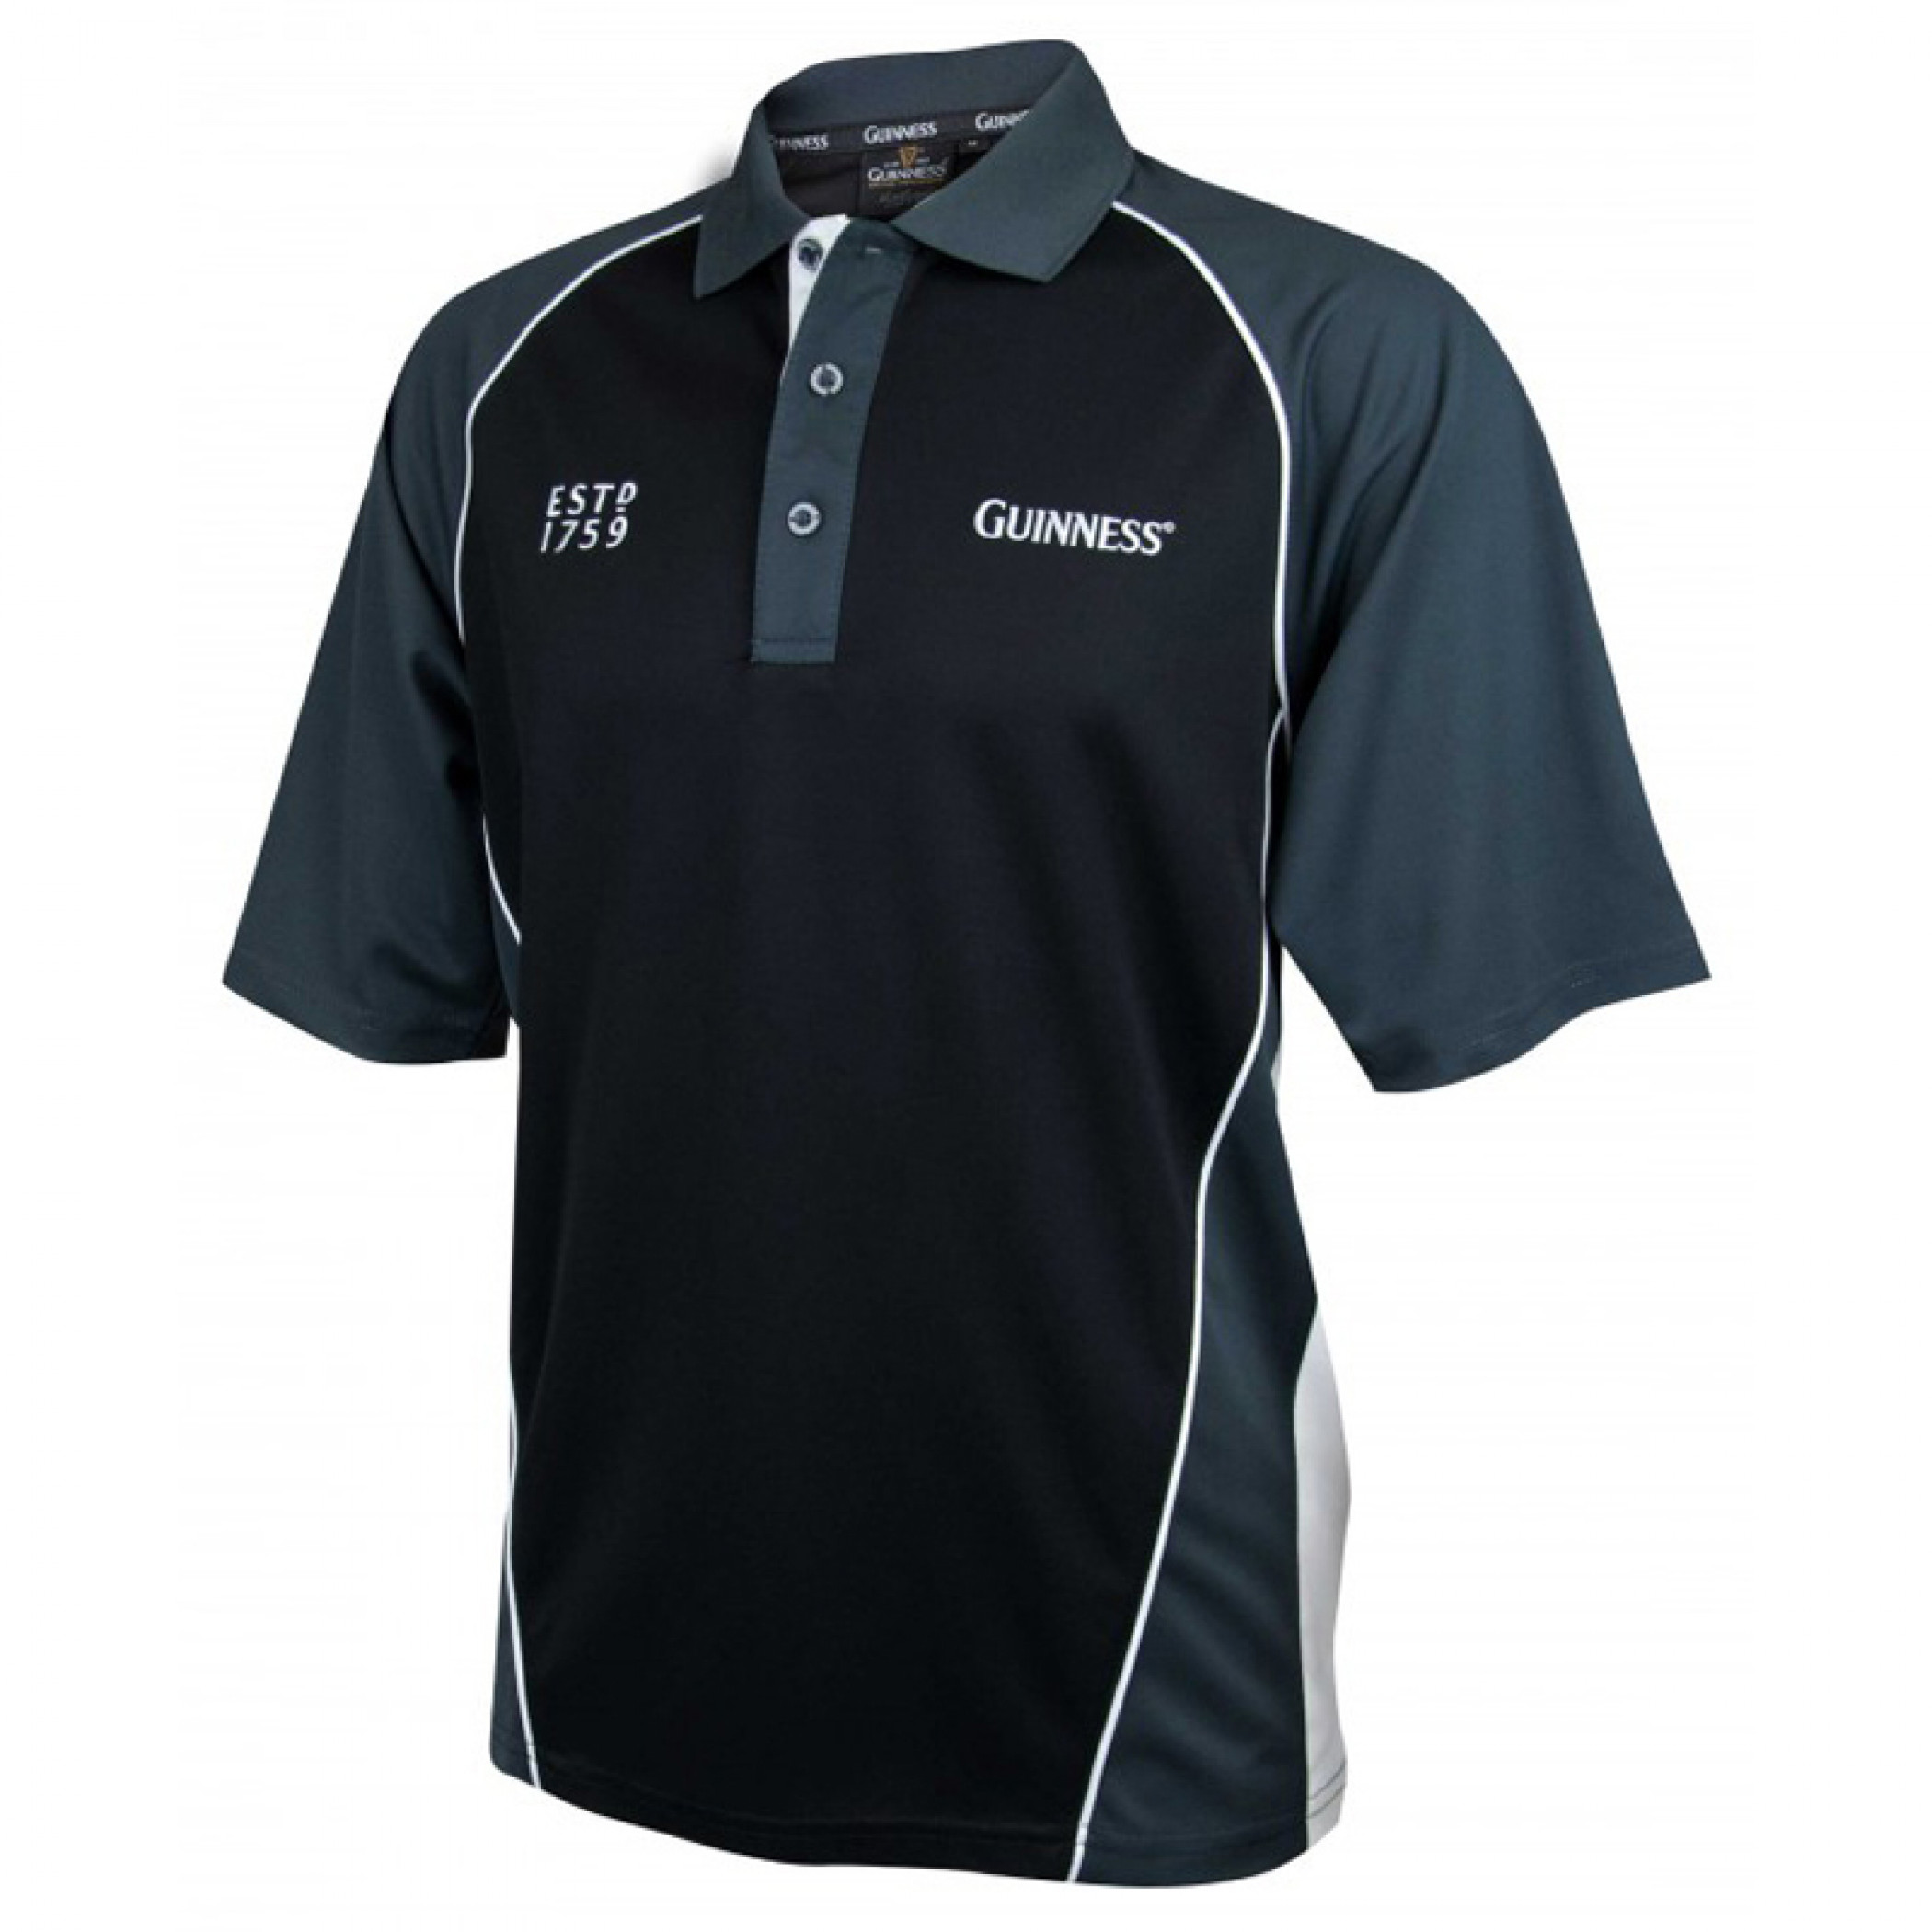 Guinness Black and Grey Performance Golf Shirt